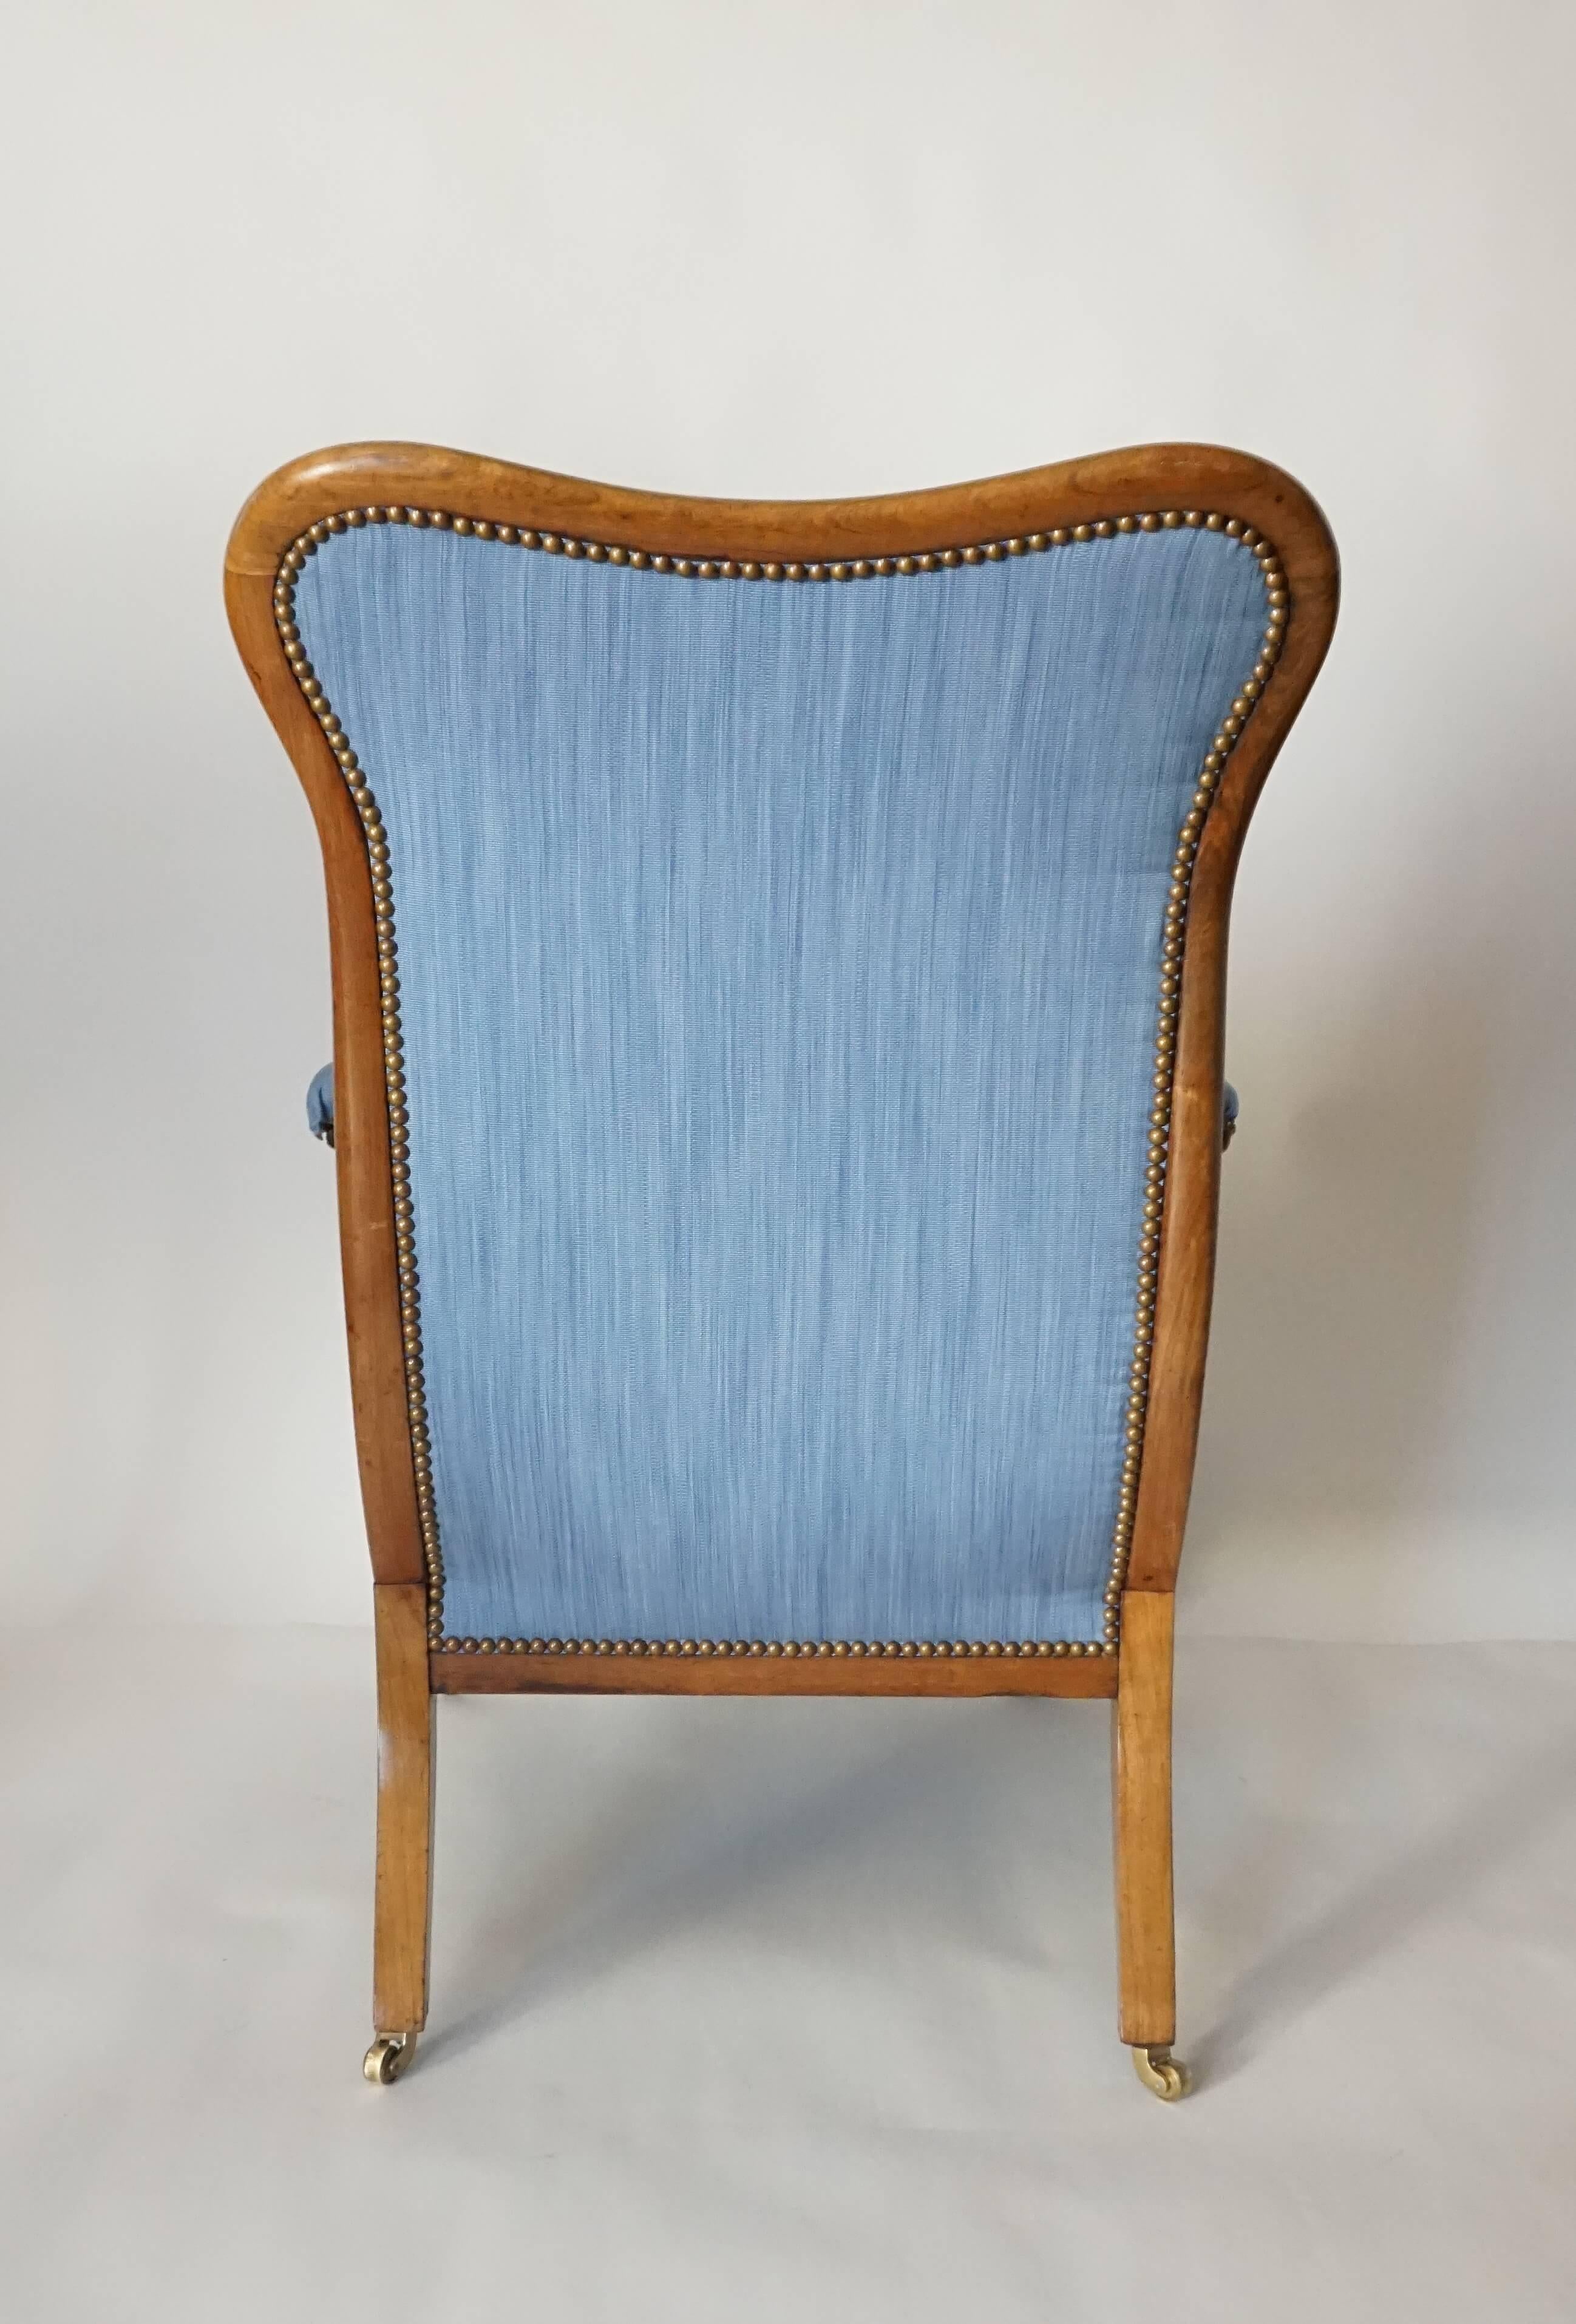 19th Century English Regency Solid Walnut Library Chair, circa 1840